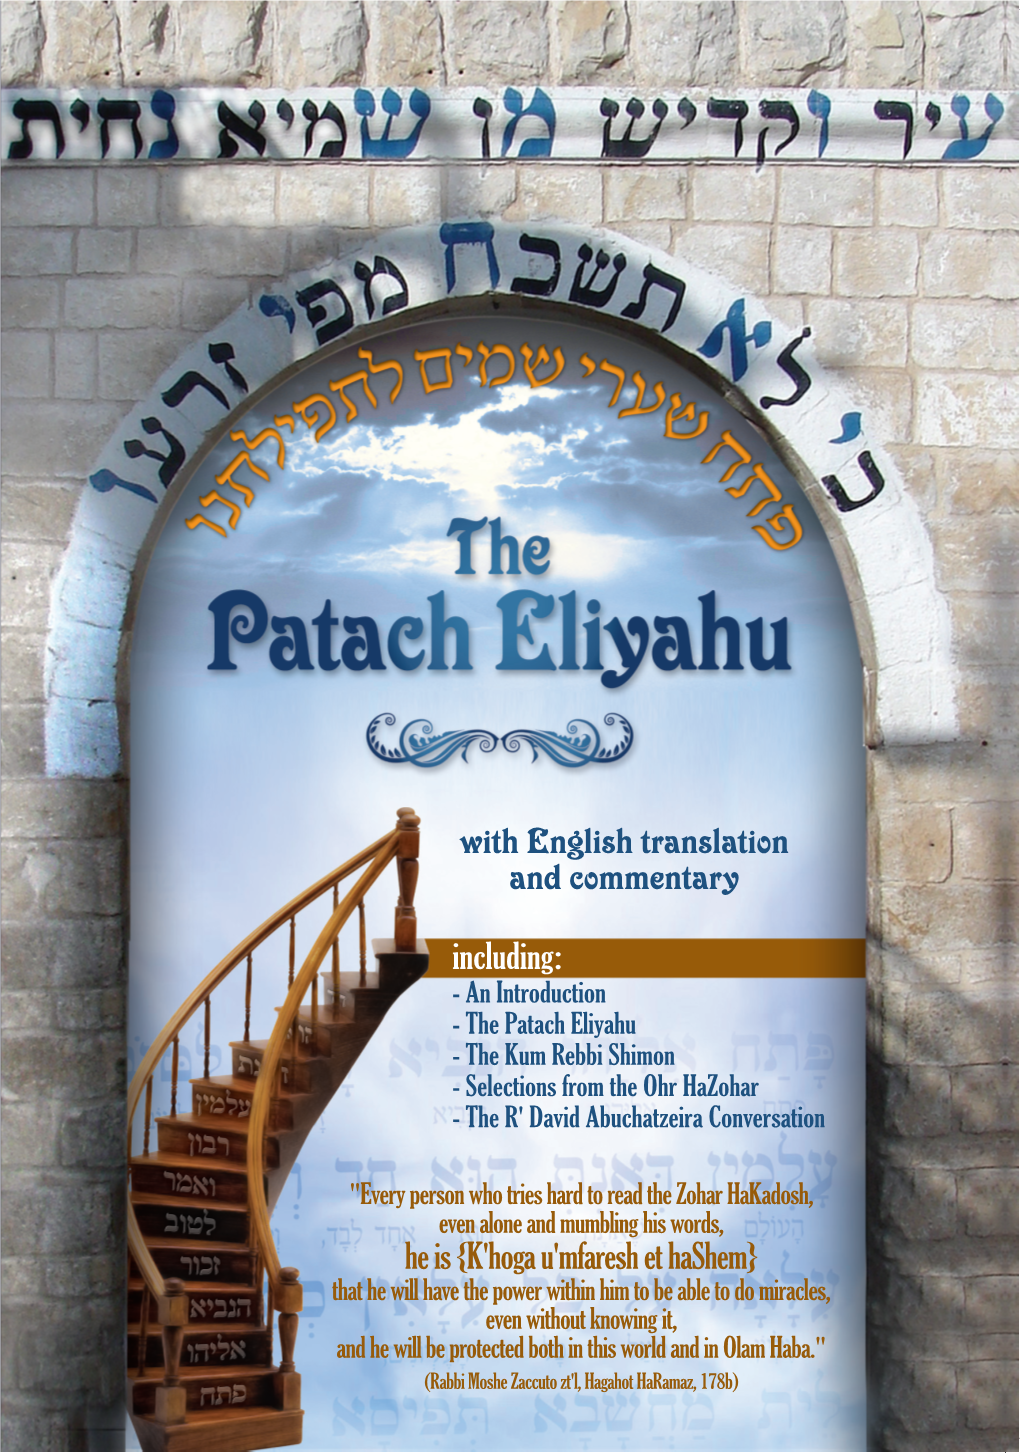 Patach Eliyahu - the Kum Rebbi Shimon - Selections from the Ohr Hazohar - the R' David Abuchatzeira Conversation